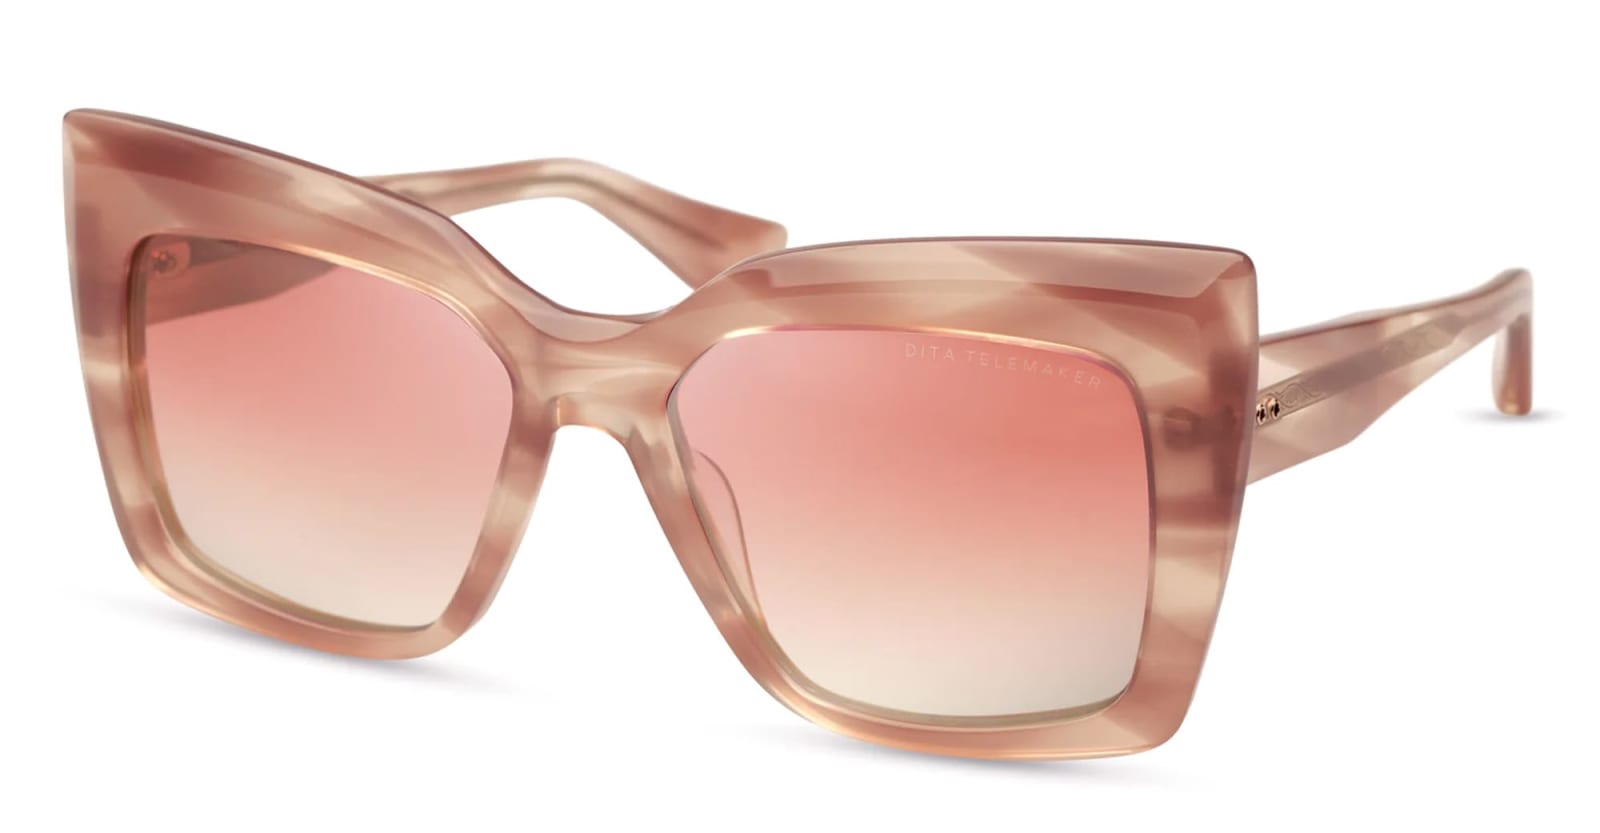 Shop Dita Telemaker - Dusty Pink Sunglasses